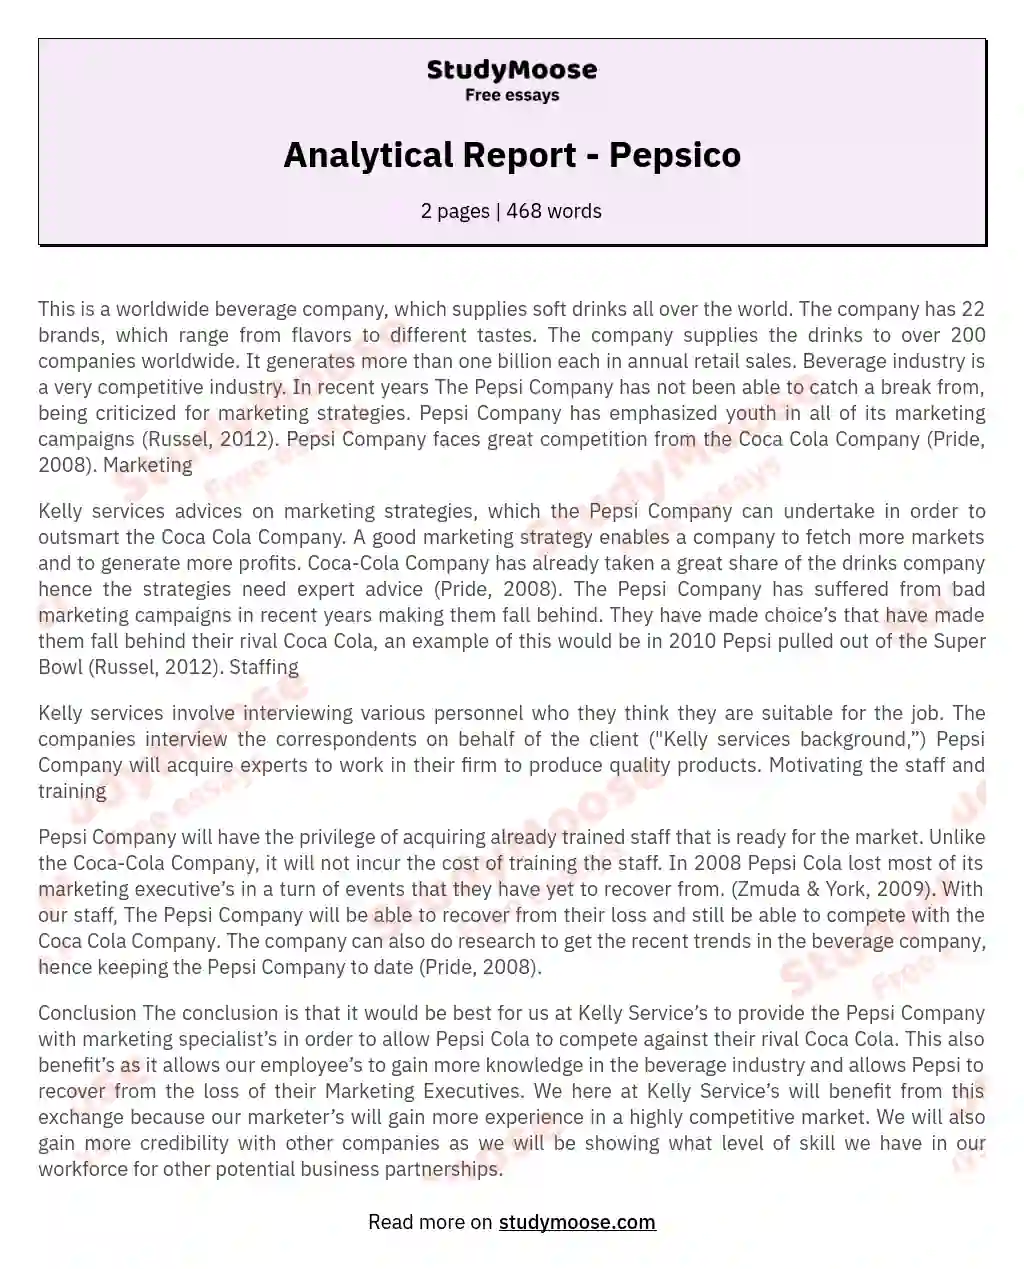 Analytical Report - Pepsico essay